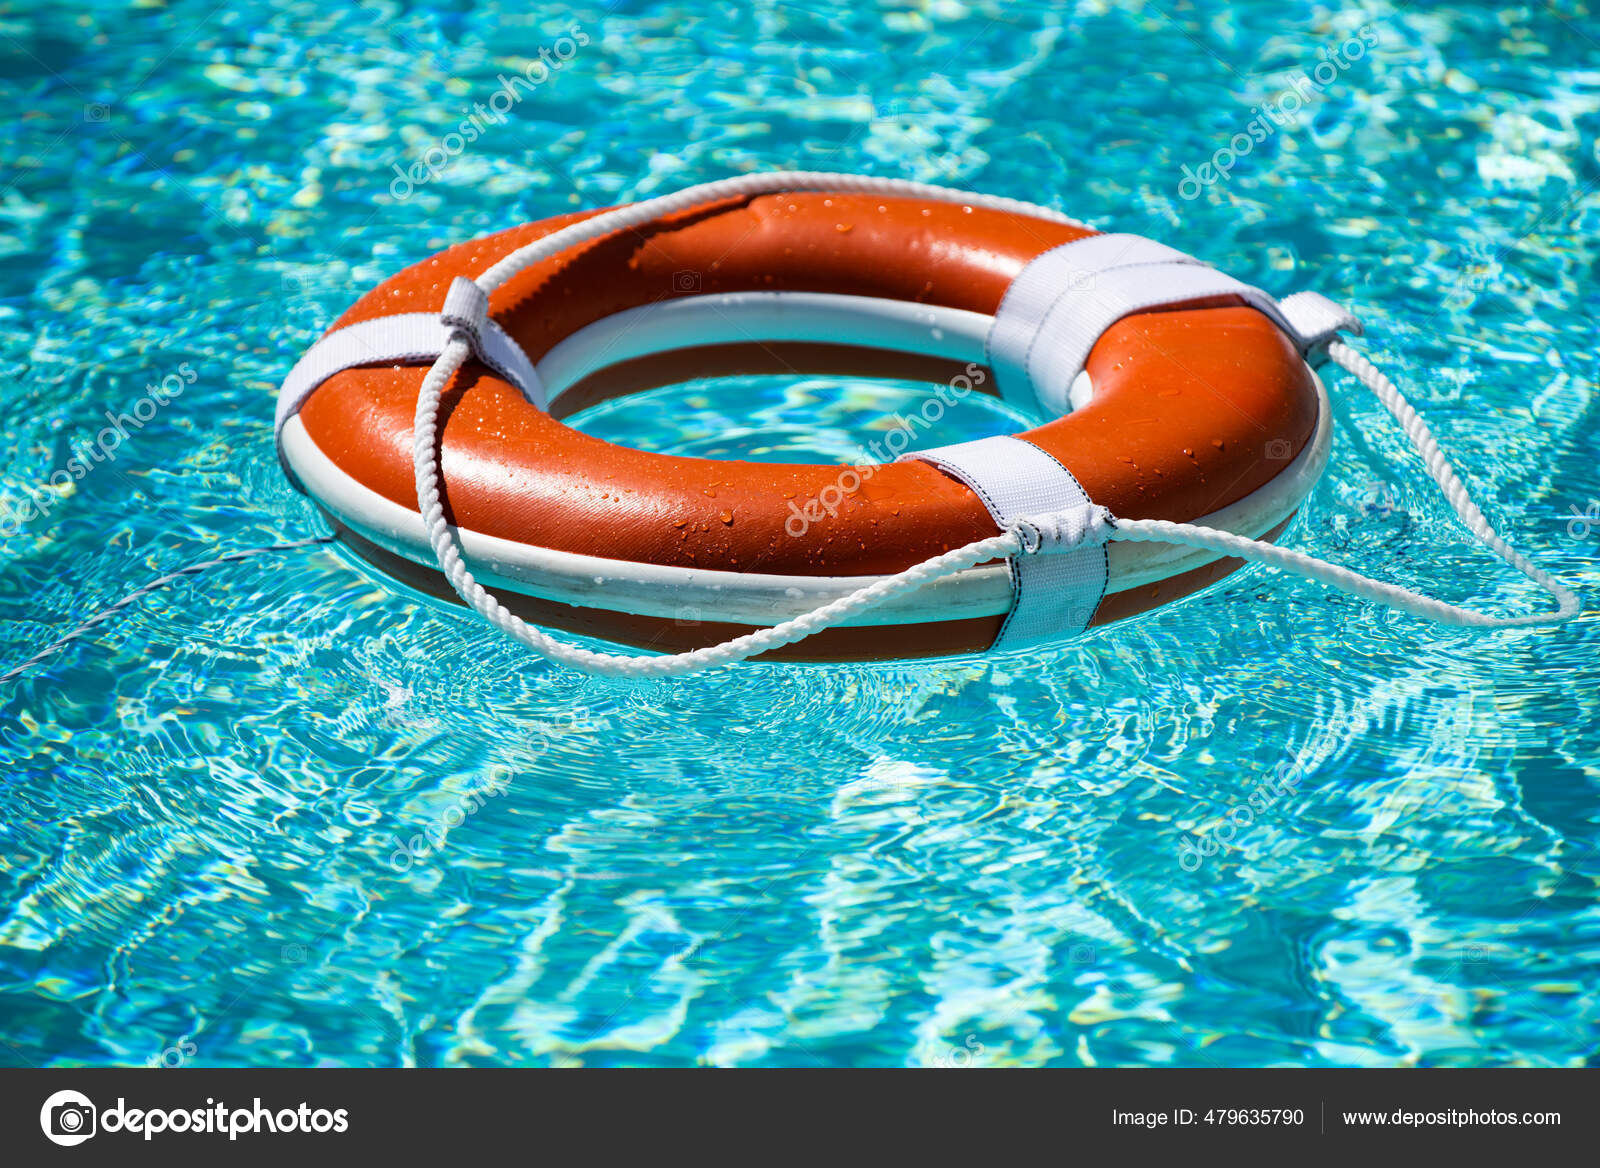 https://st2.depositphotos.com/3584053/47963/i/1600/depositphotos_479635790-stock-photo-lifebelt-on-sea-or-pool.jpg